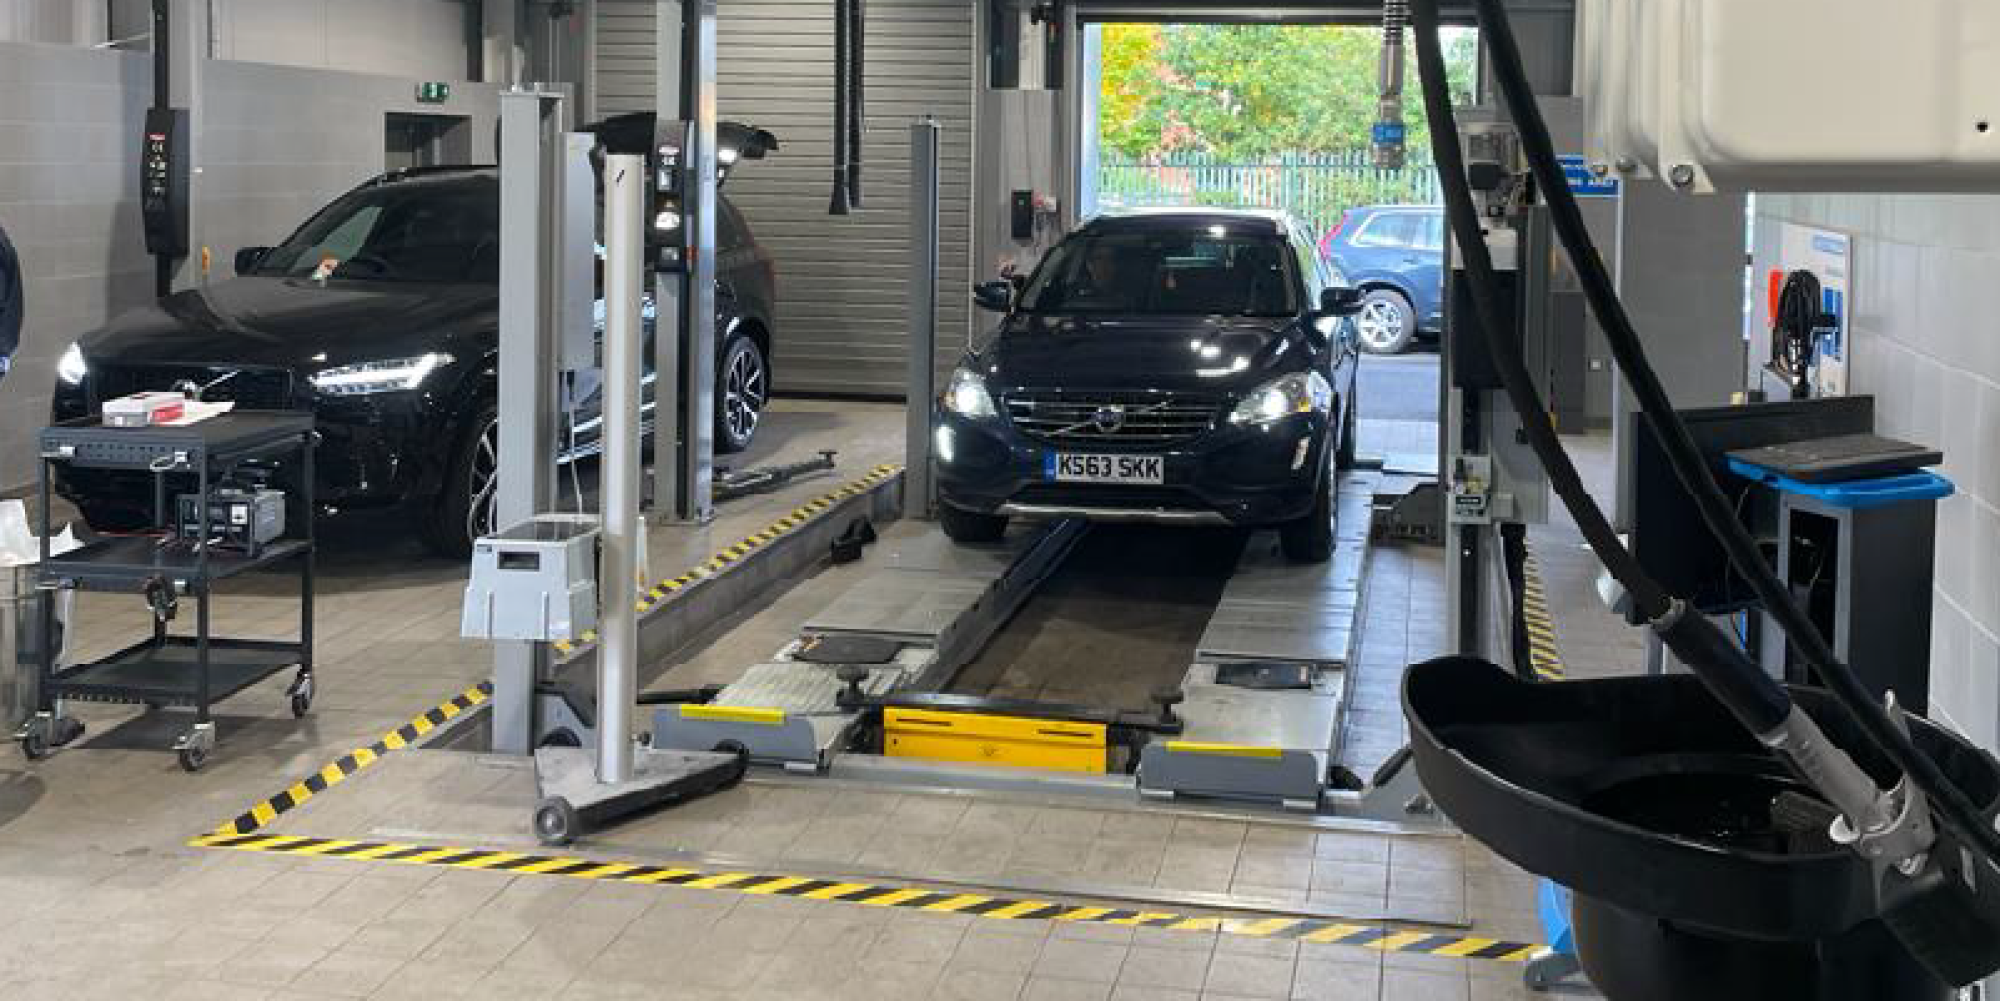 Project Update: Completed Volvo Shrewsbury garage equipment installation